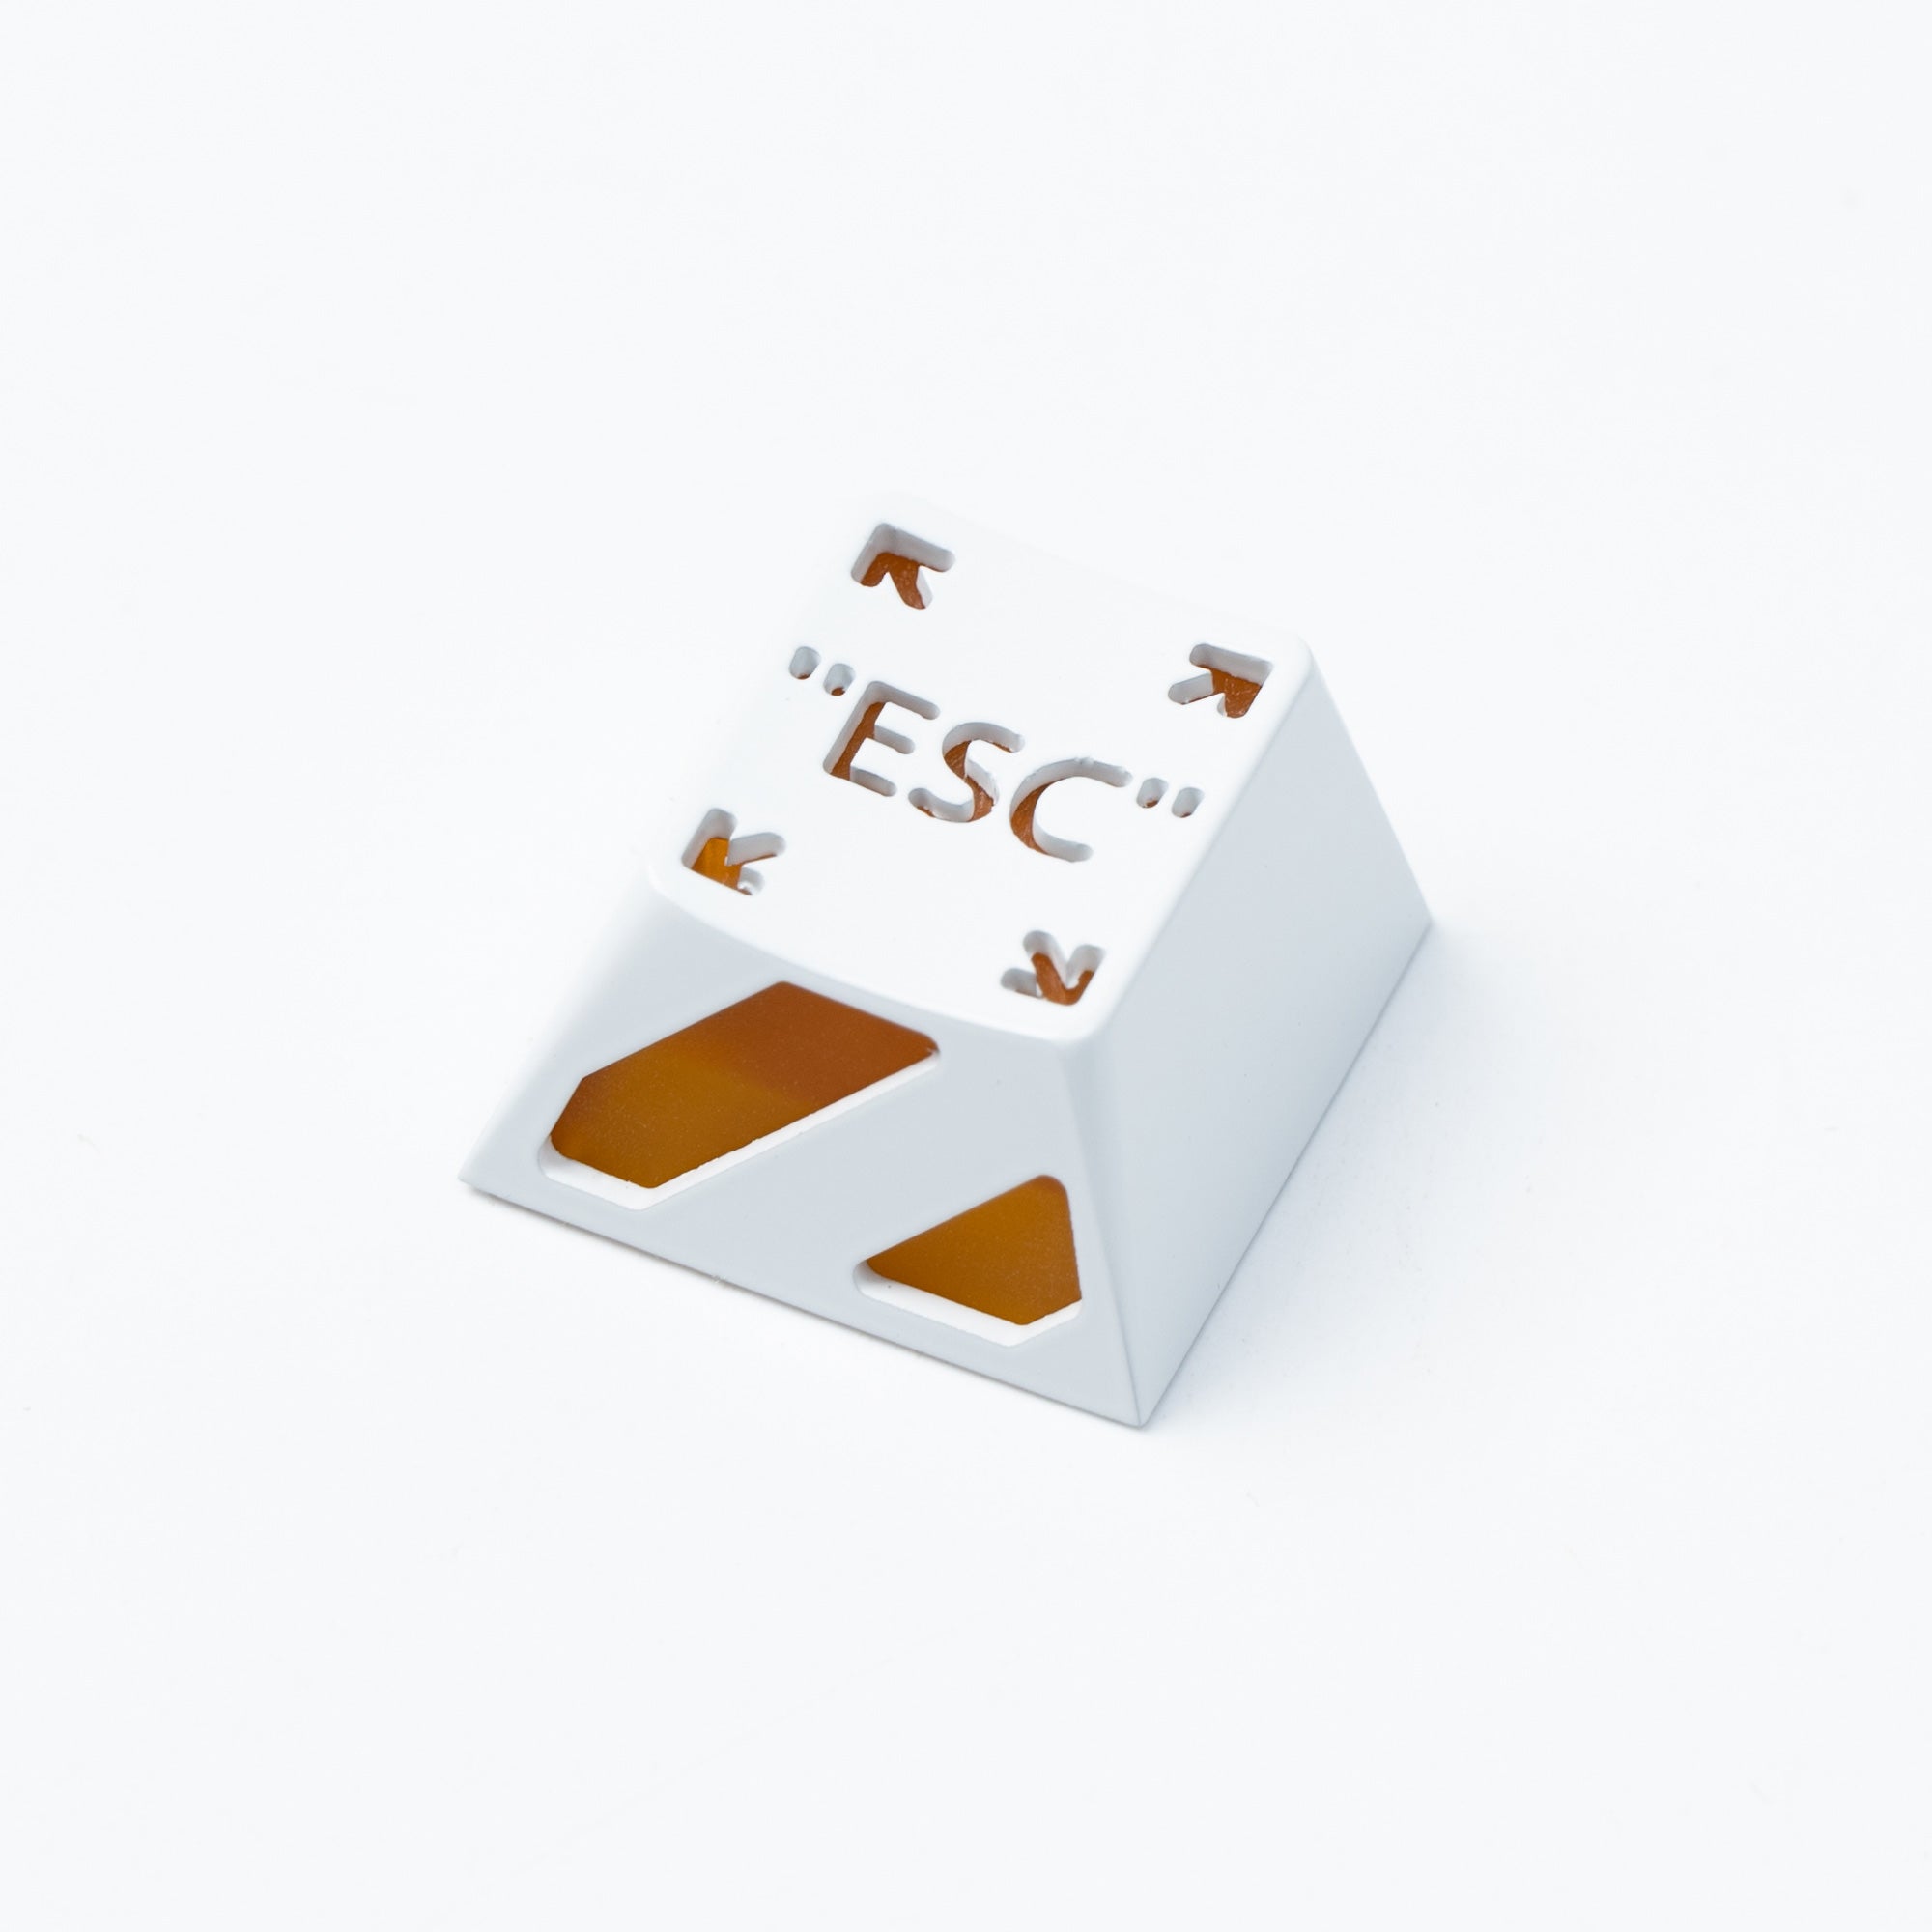 ESC R1 Aluminium Alloy Artisan Keycap-White